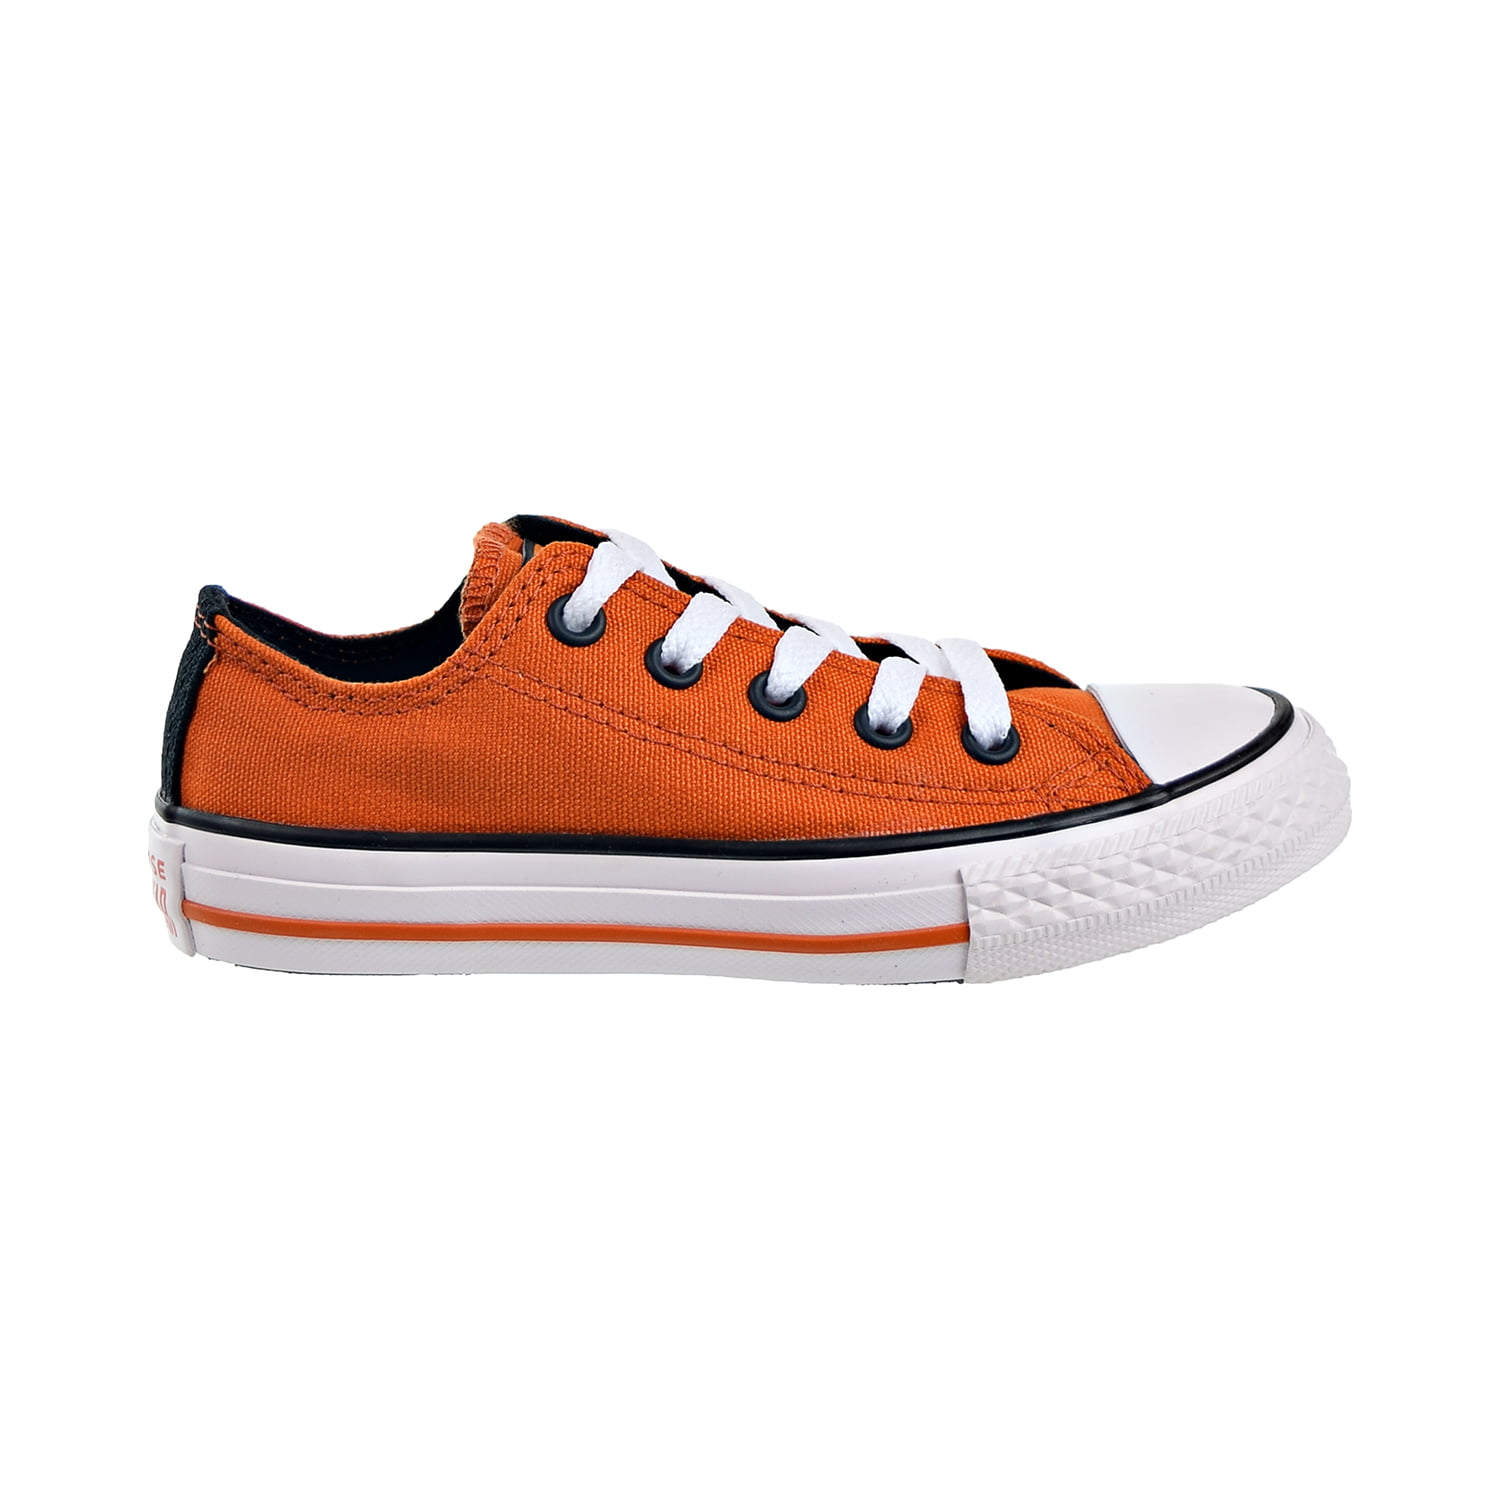 Converse Chuck Taylor All Star Ox Big Kids Shoes Campfire  Orange-Black-White 661864f 